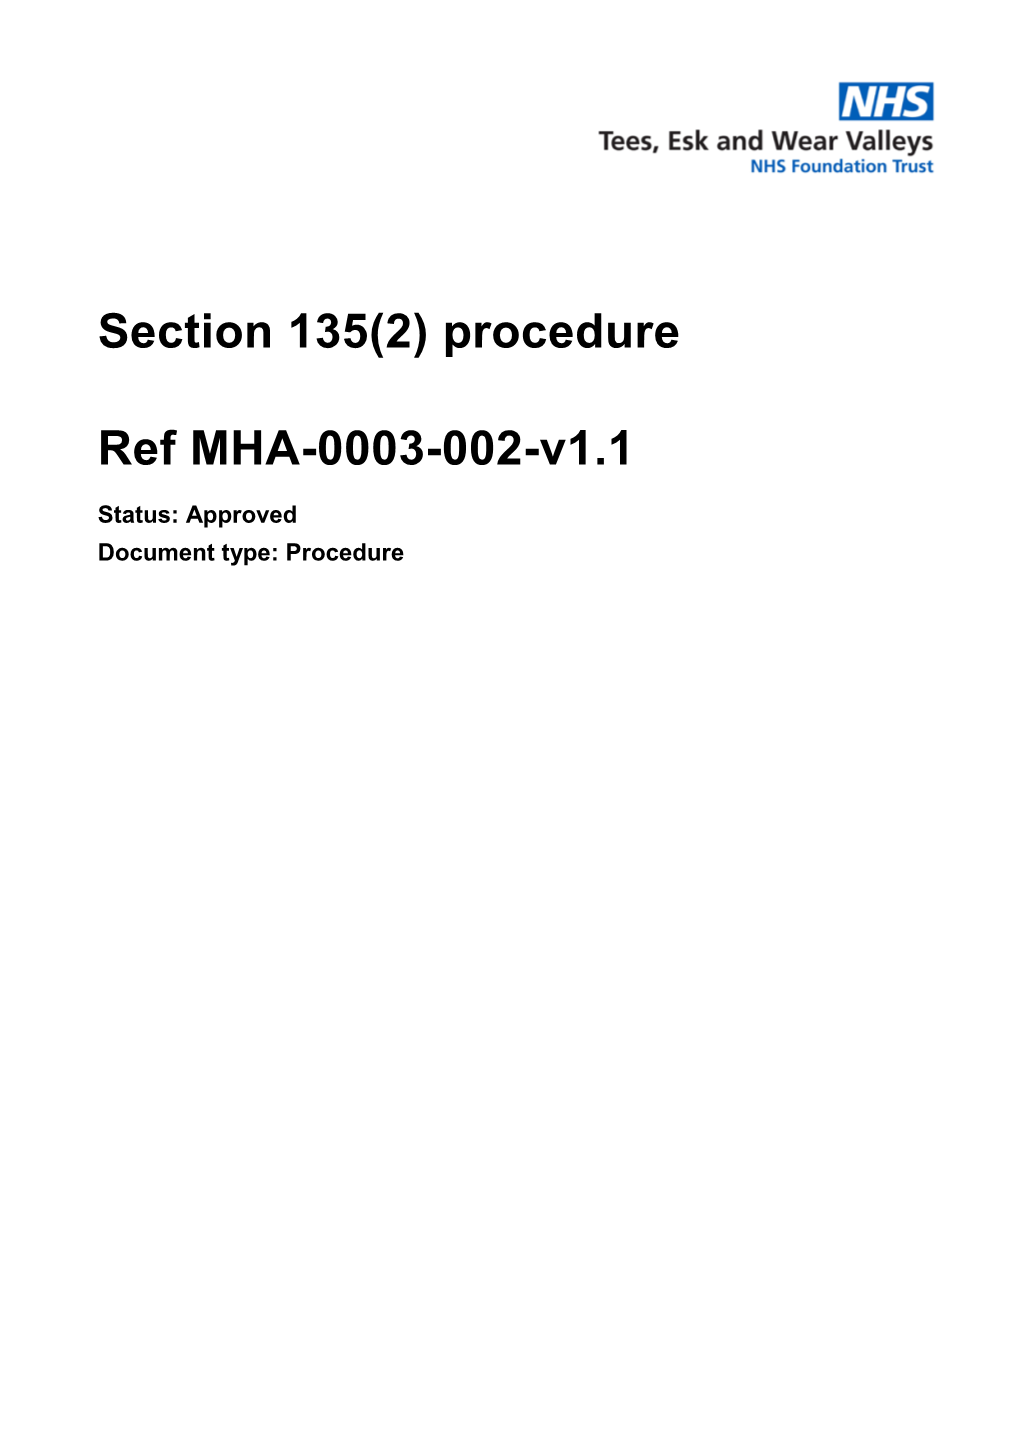 Section 135(2) Procedure Ref MHA-0003-002-V1.1